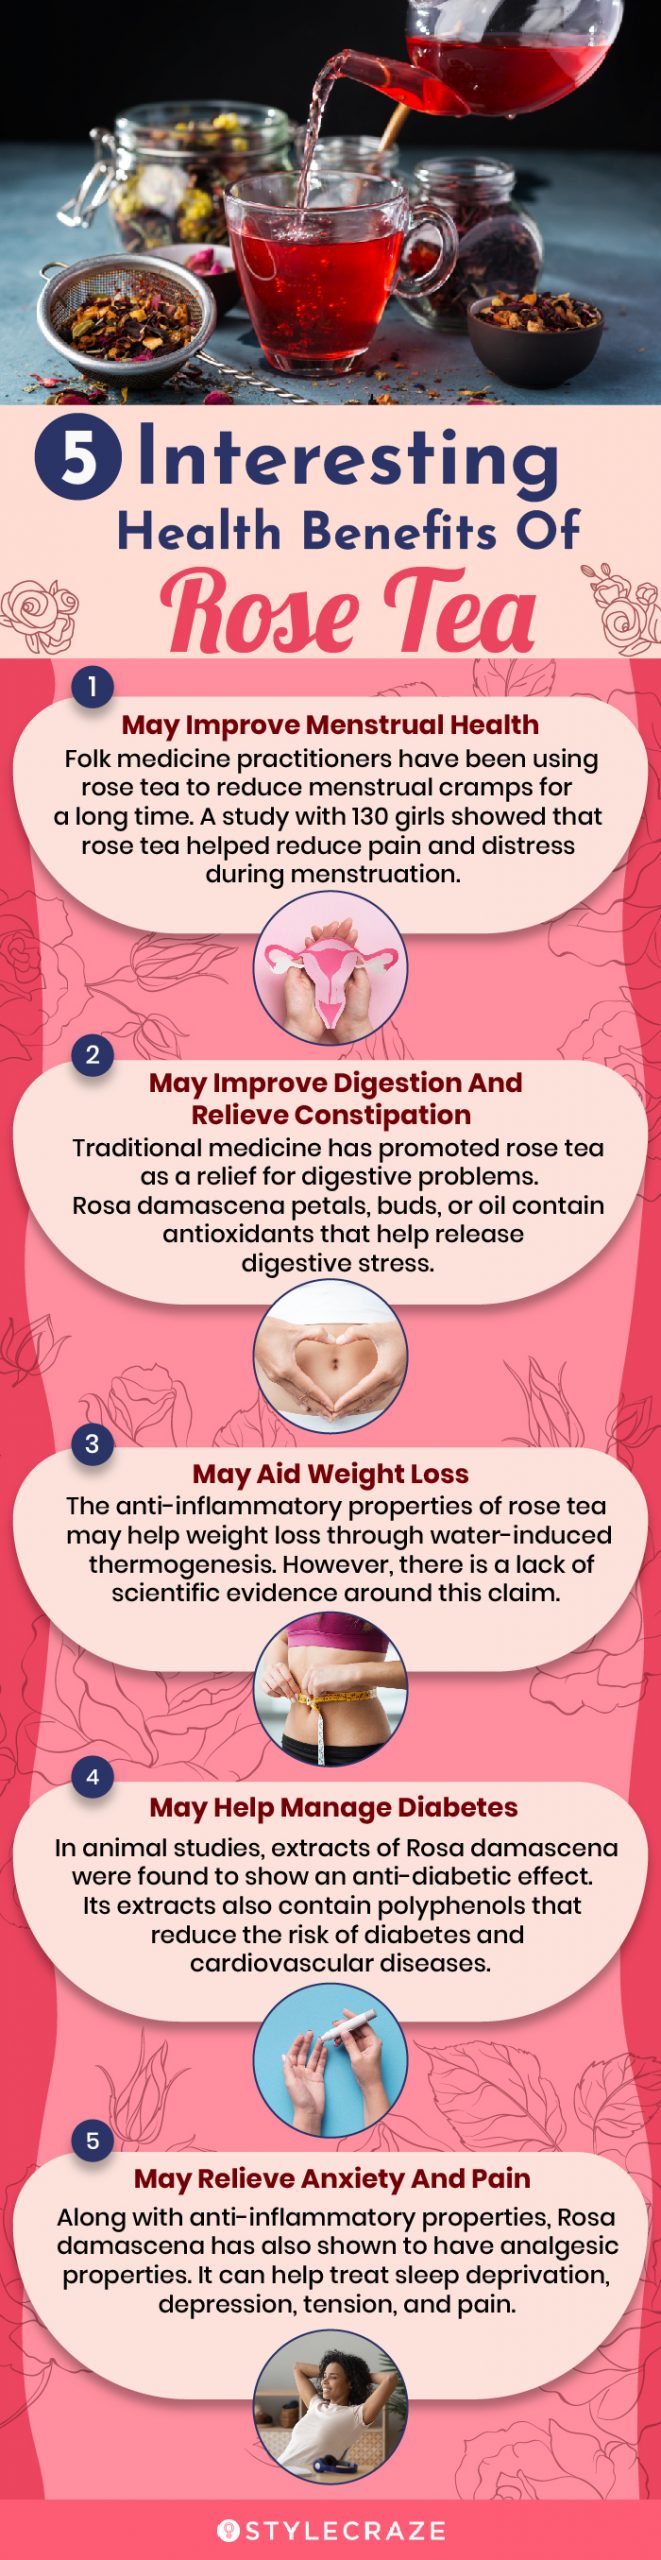 5 interesting health benefits of rose tea (infographic)